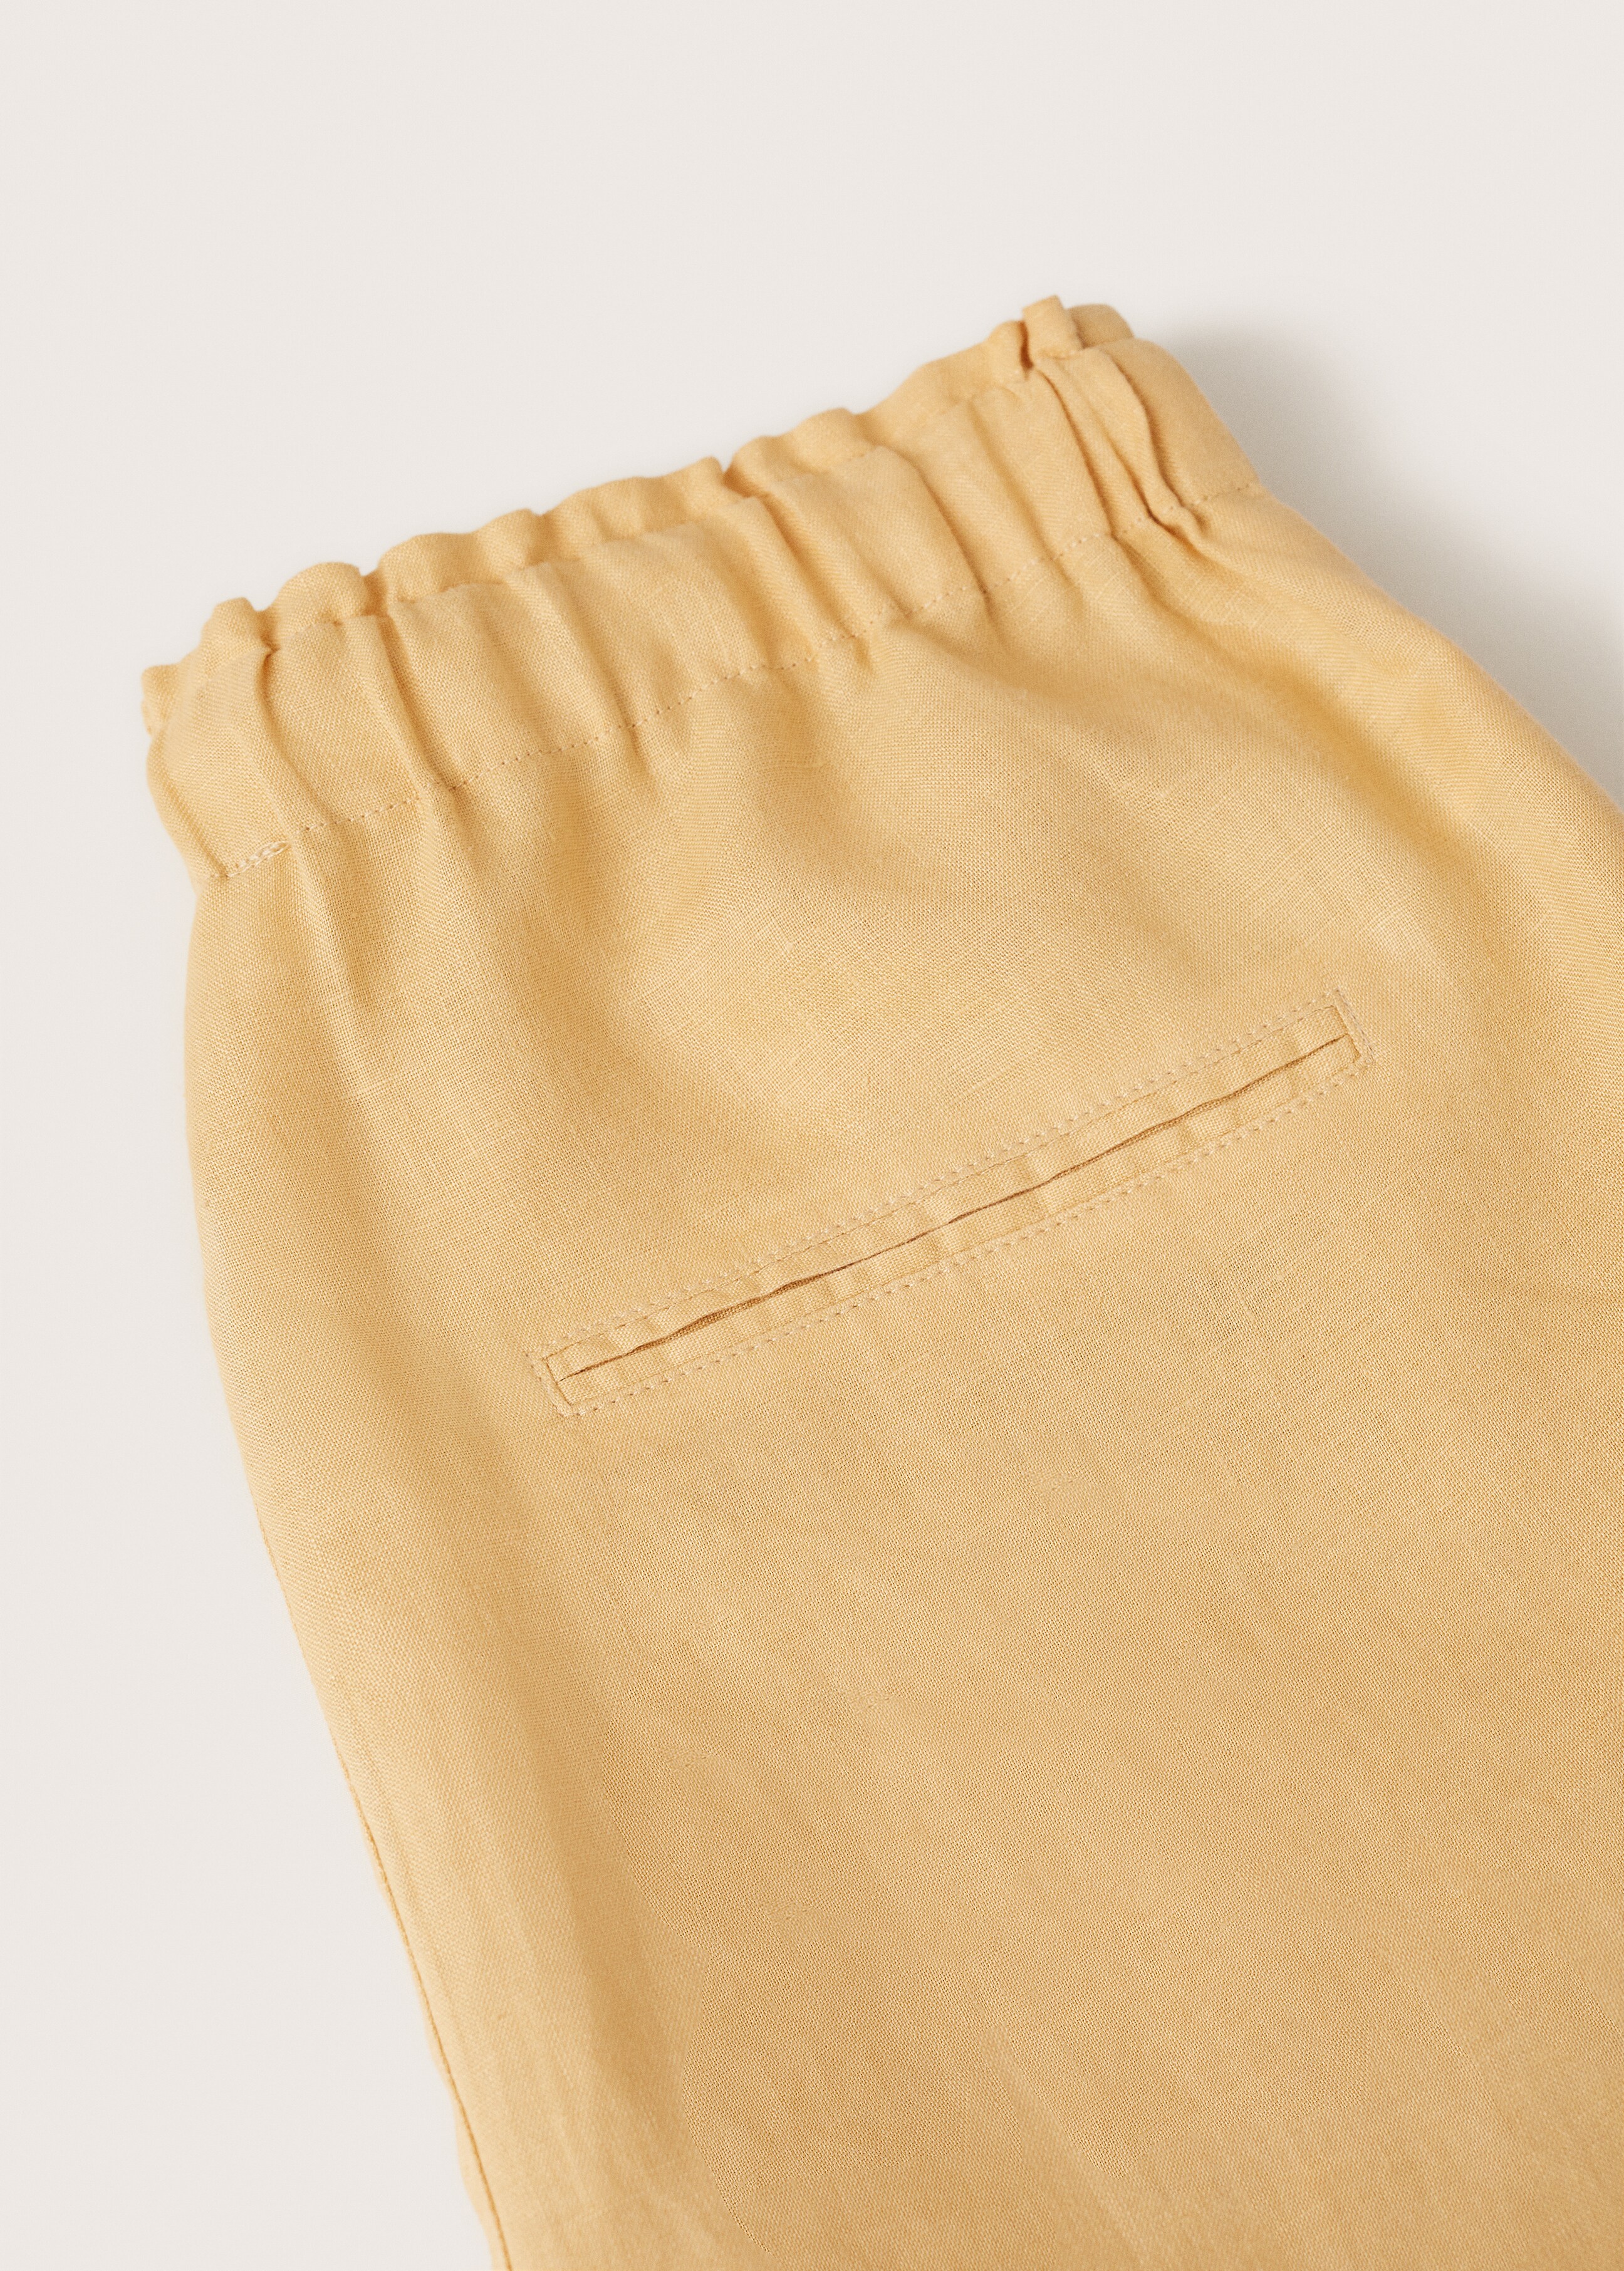 100% linen pants - Details of the article 8